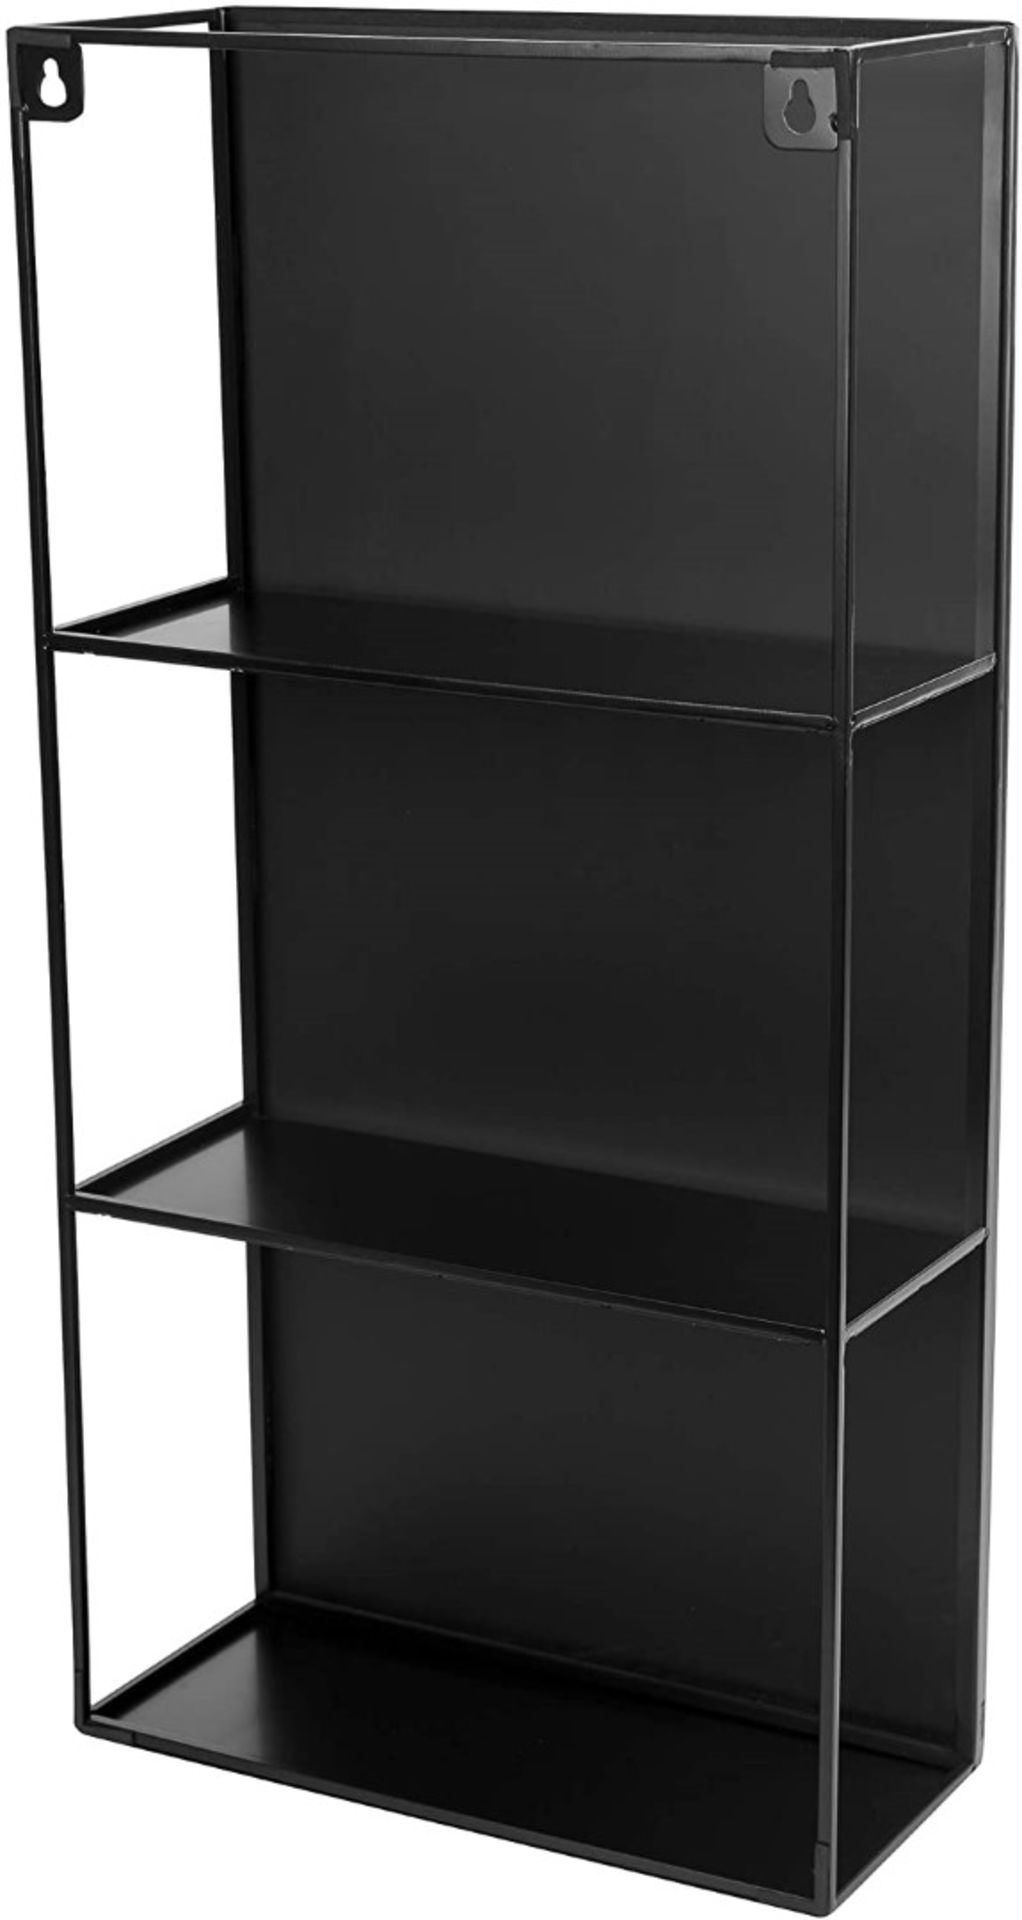 1 x Umbra 'CUBIKO' Sleek Modern Mirrored Medicine Cabinet With A Black Metal Frame - Dimensions: - Image 6 of 8